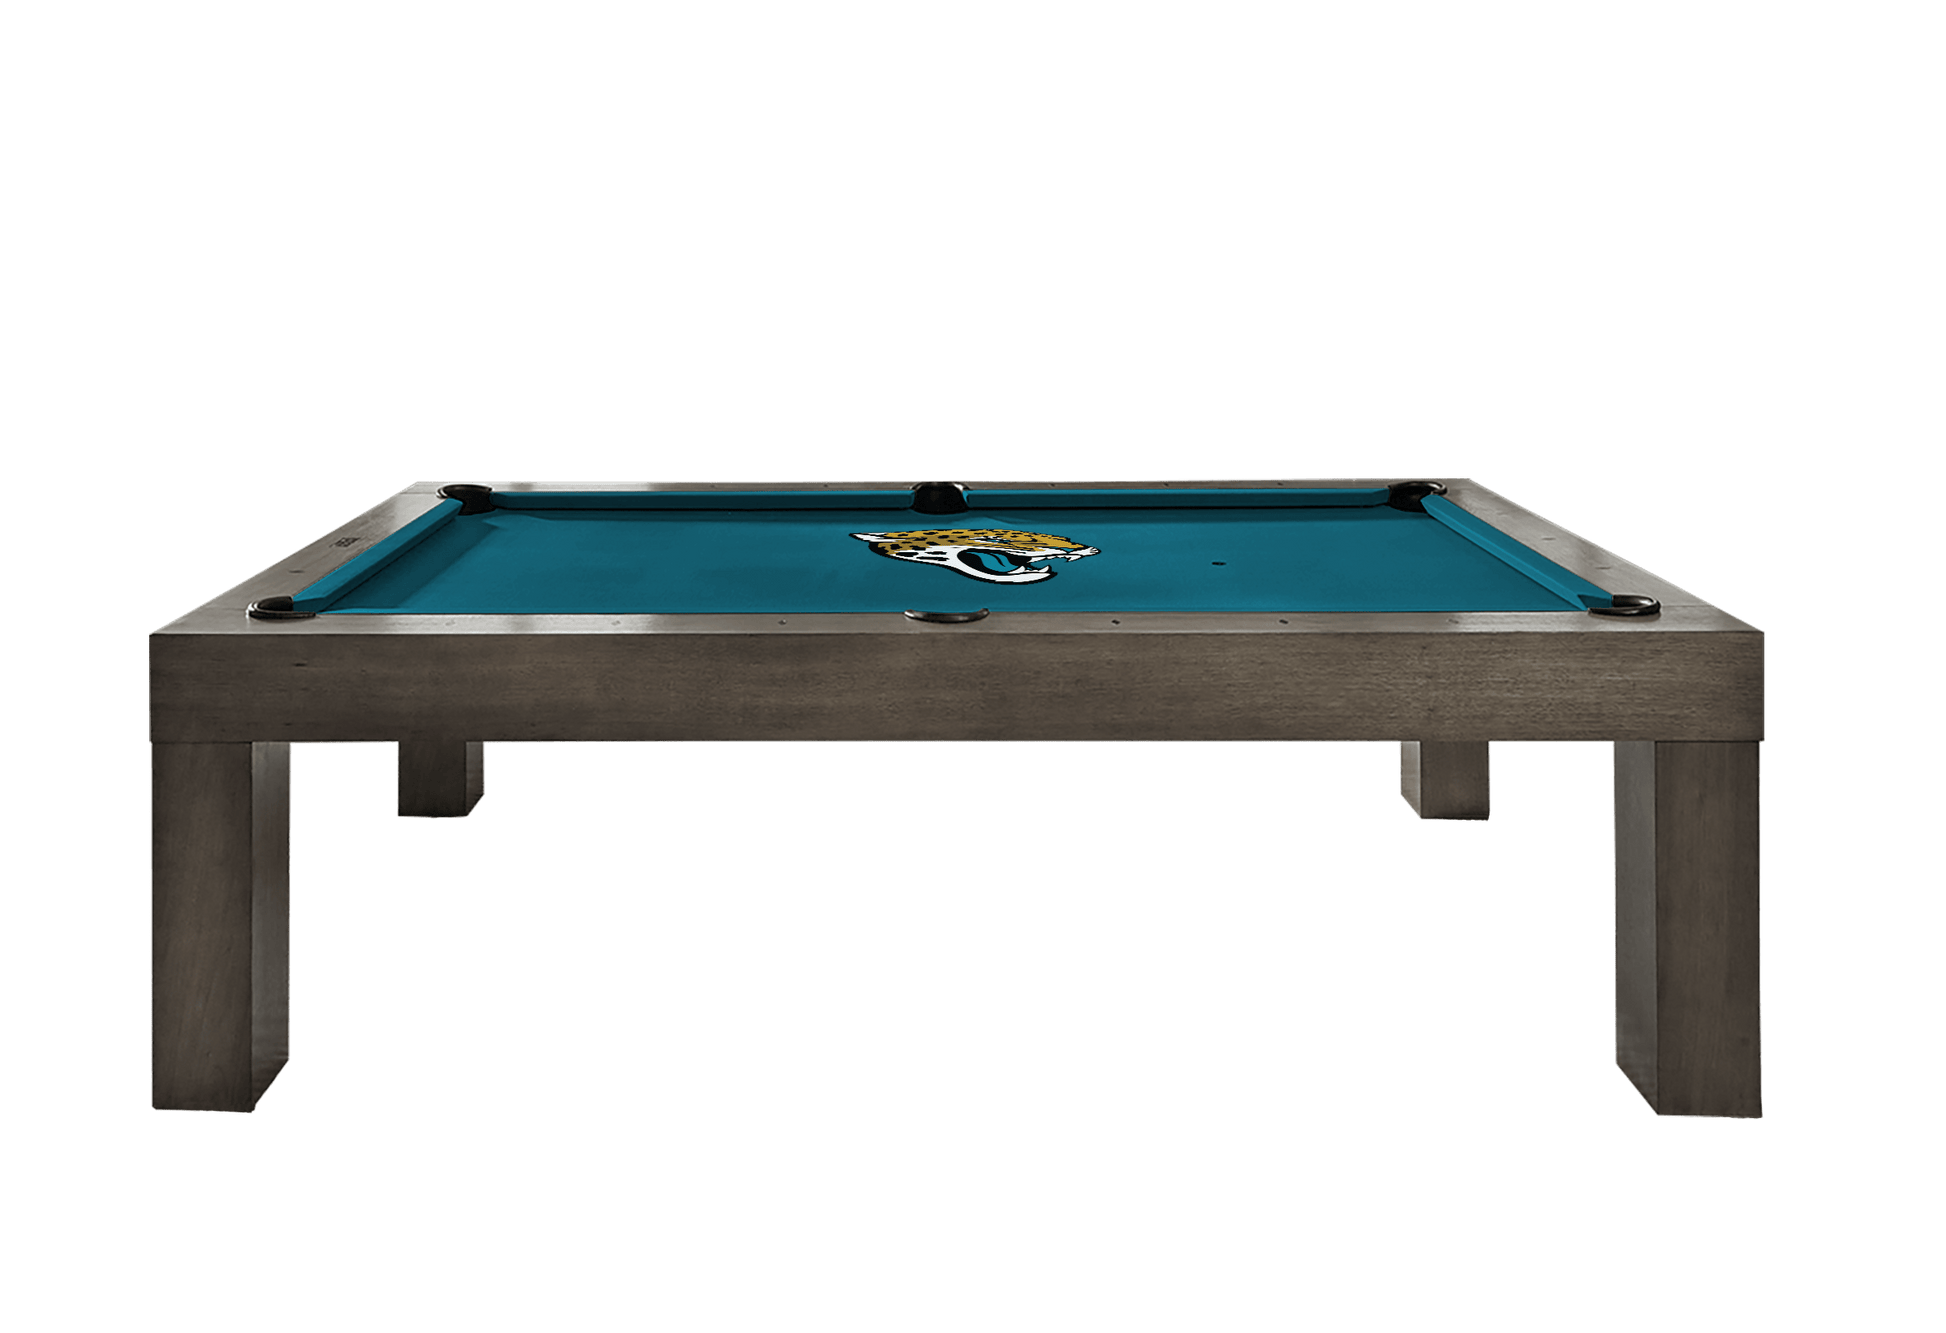 Jacksonville Jaguars Premium Pool Table Bundle - Charcoal Pool Bundle Home Arcade Games   